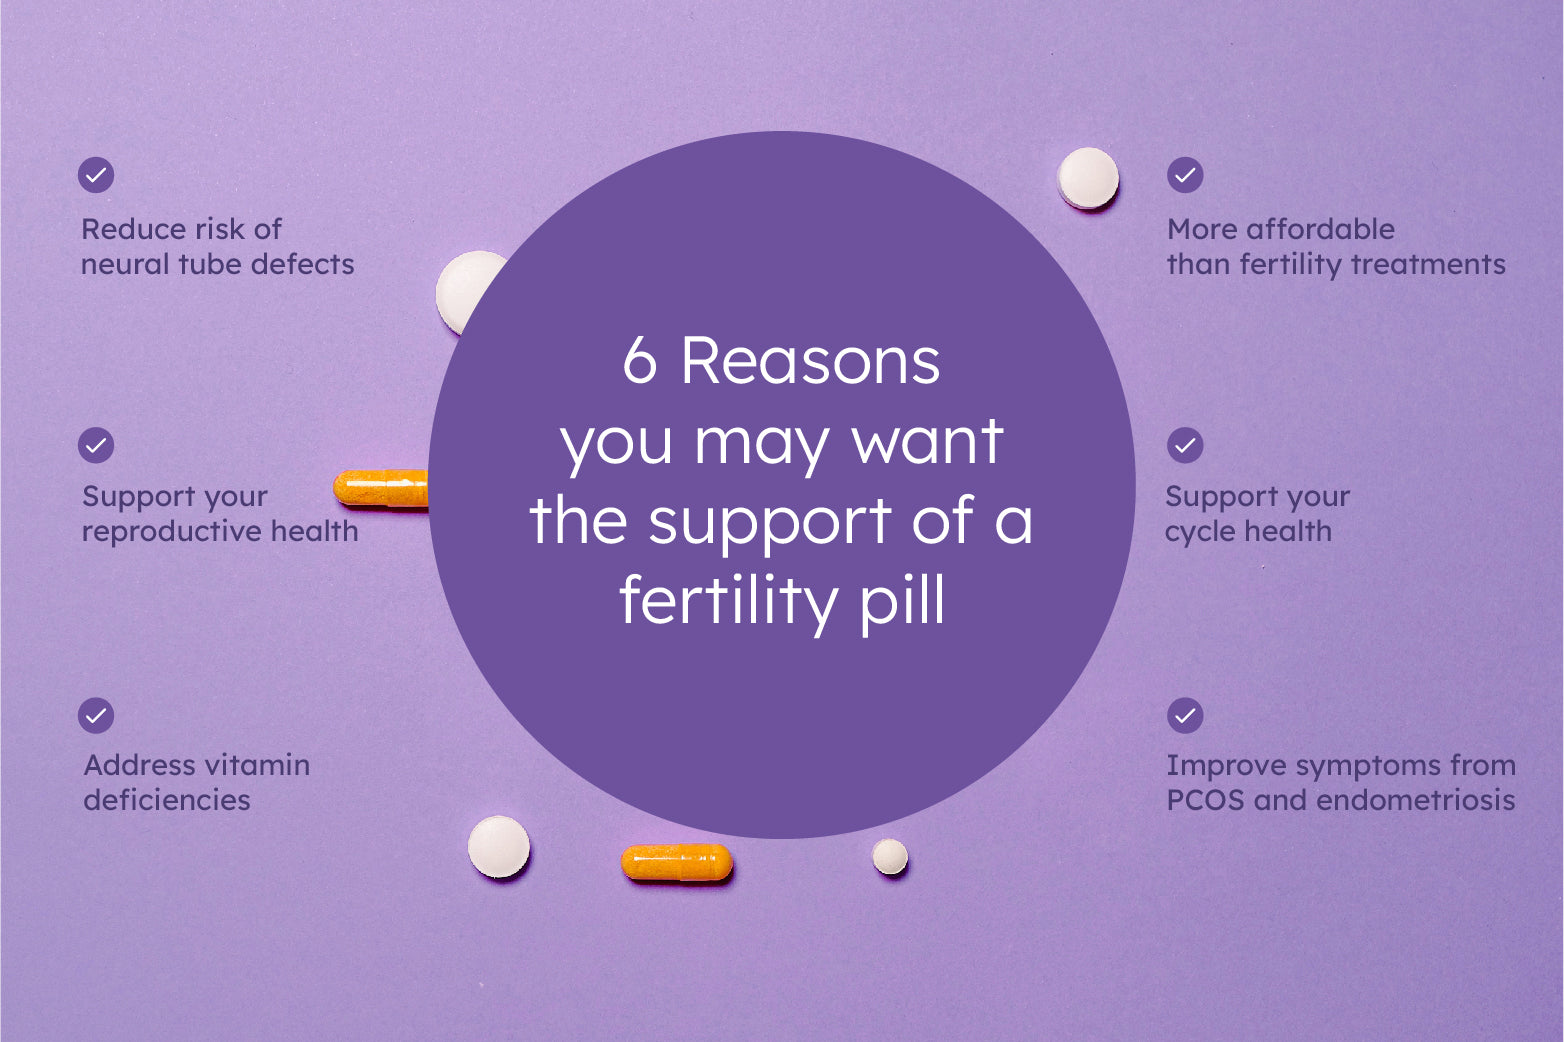 how to choose a fertility pill